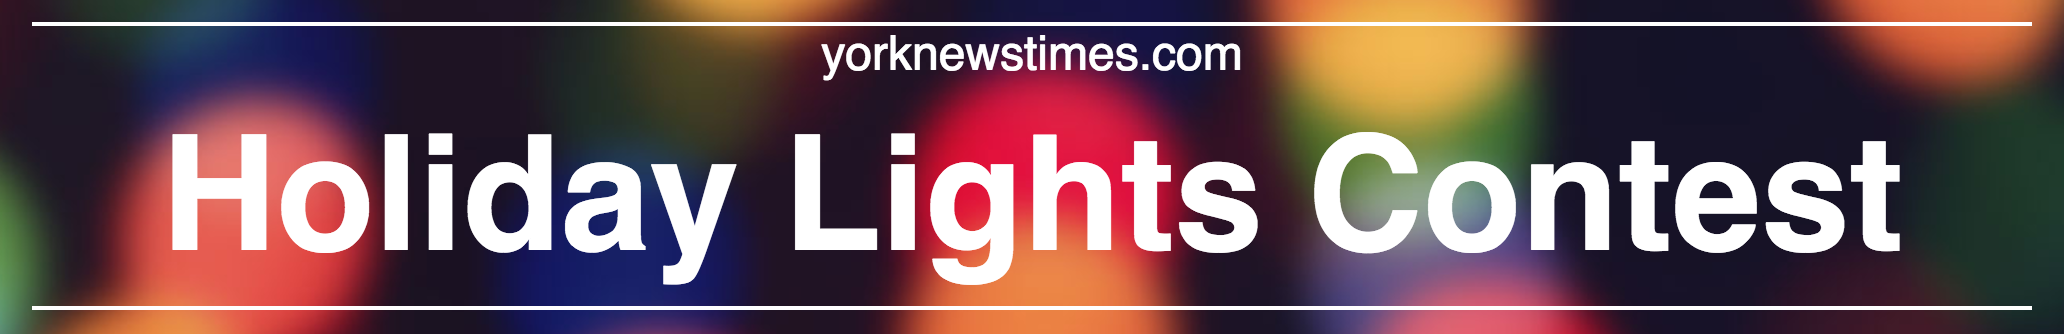 York News-Times Holiday Lights Contest